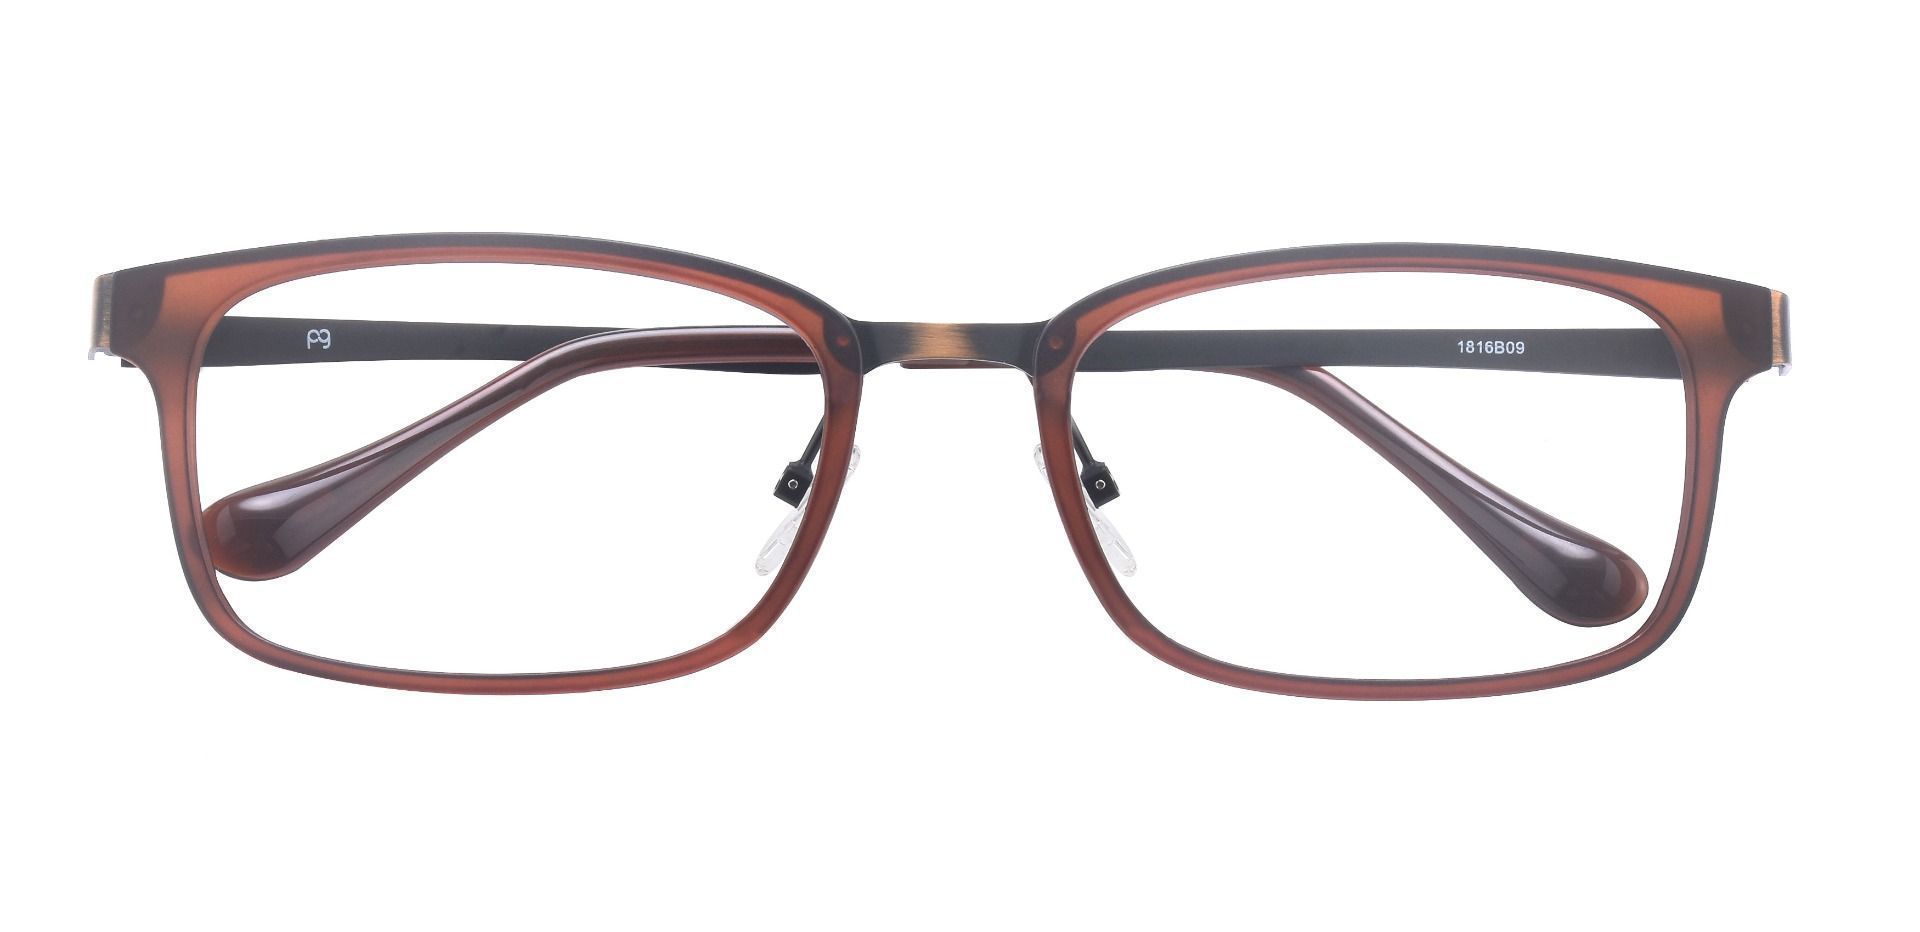 Kensington Square Progressive Glasses - Brown